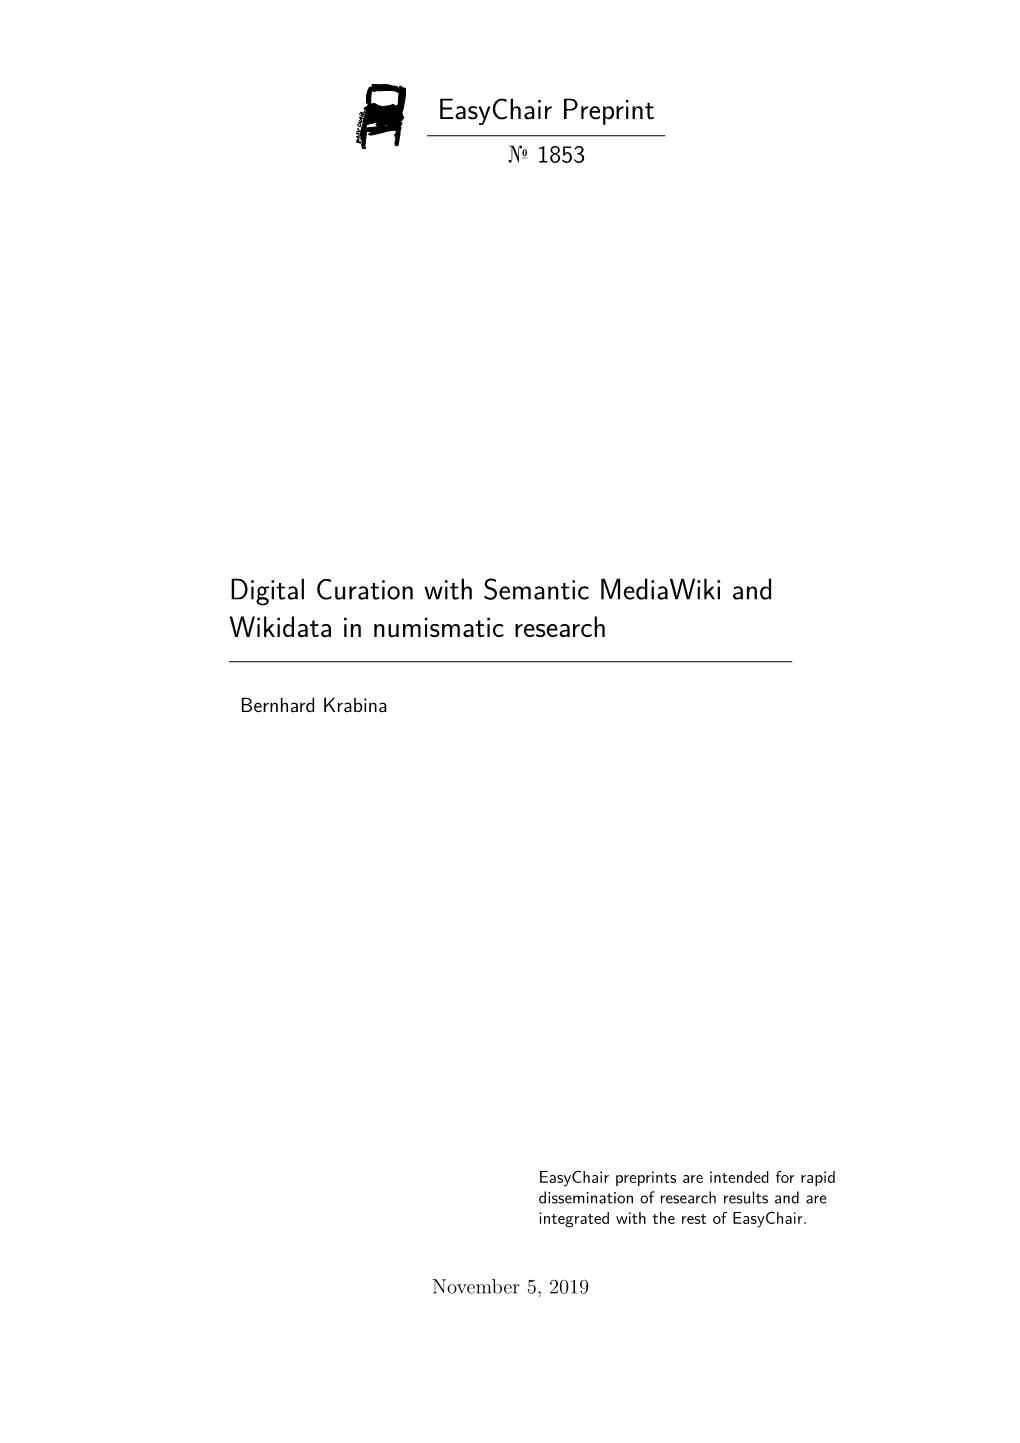 Easychair Preprint Digital Curation with Semantic Mediawiki And